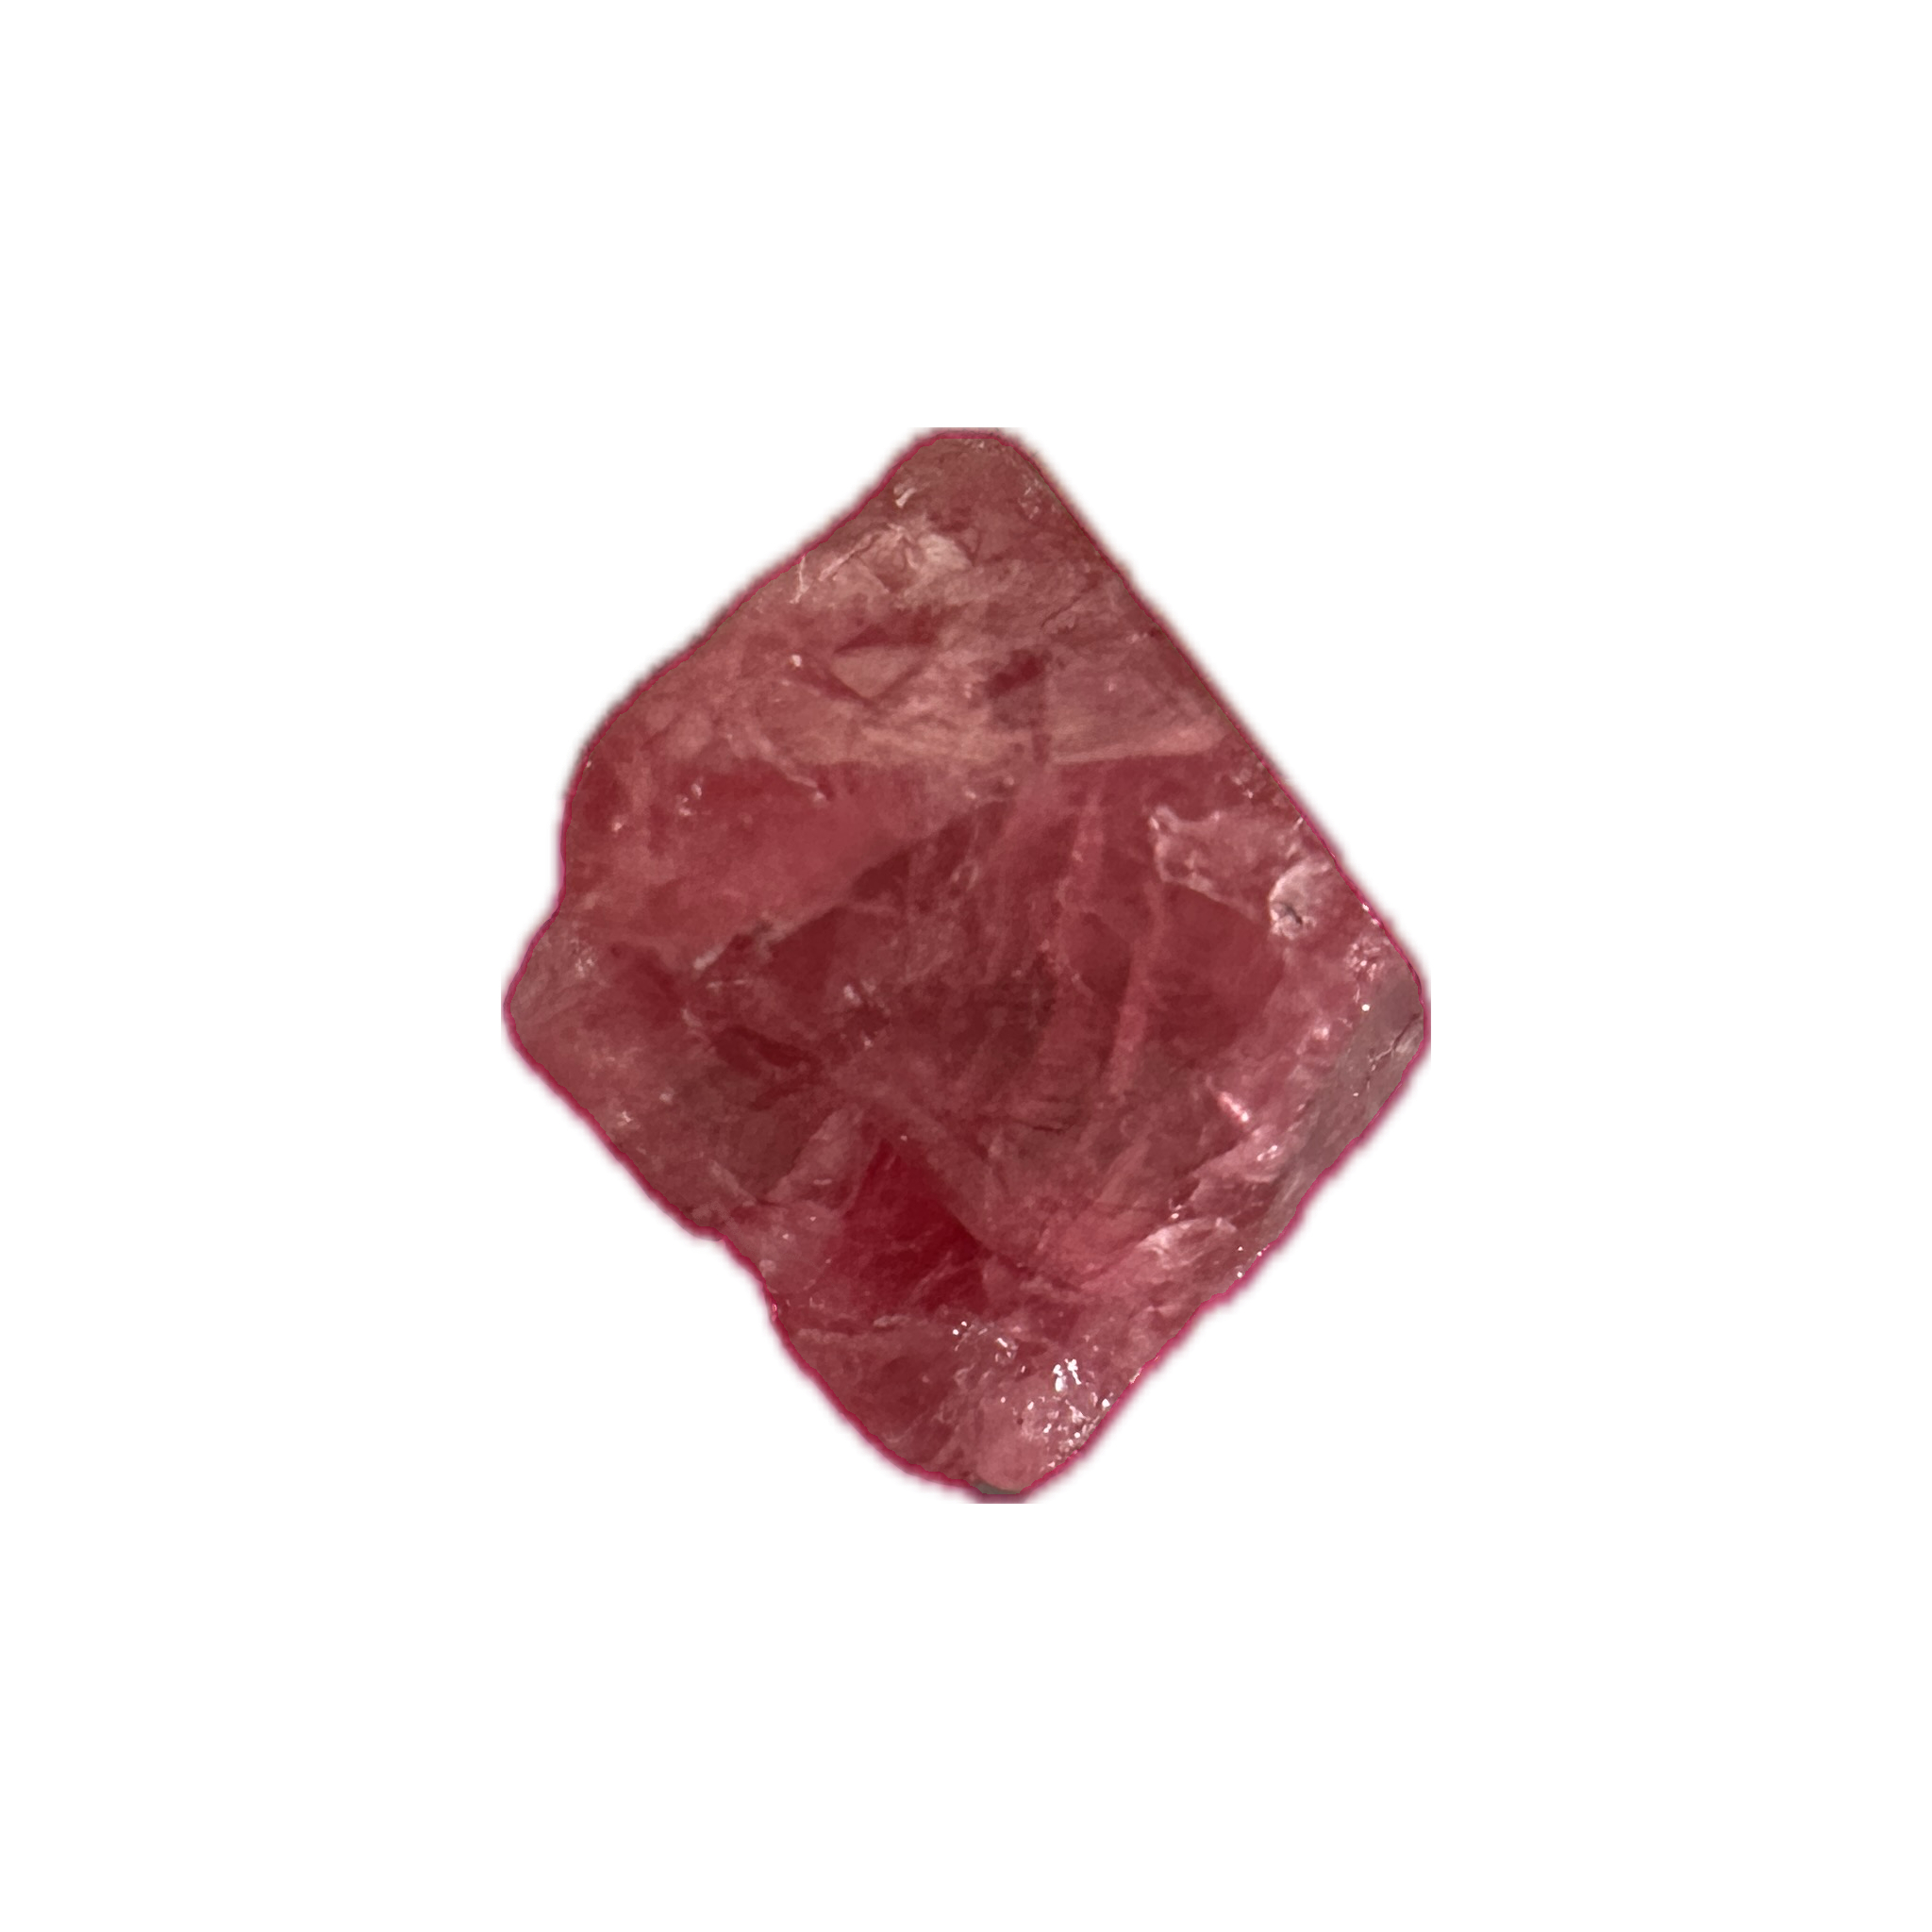 Spinel thumbnail mineral, Tanzania Prehistoric Online